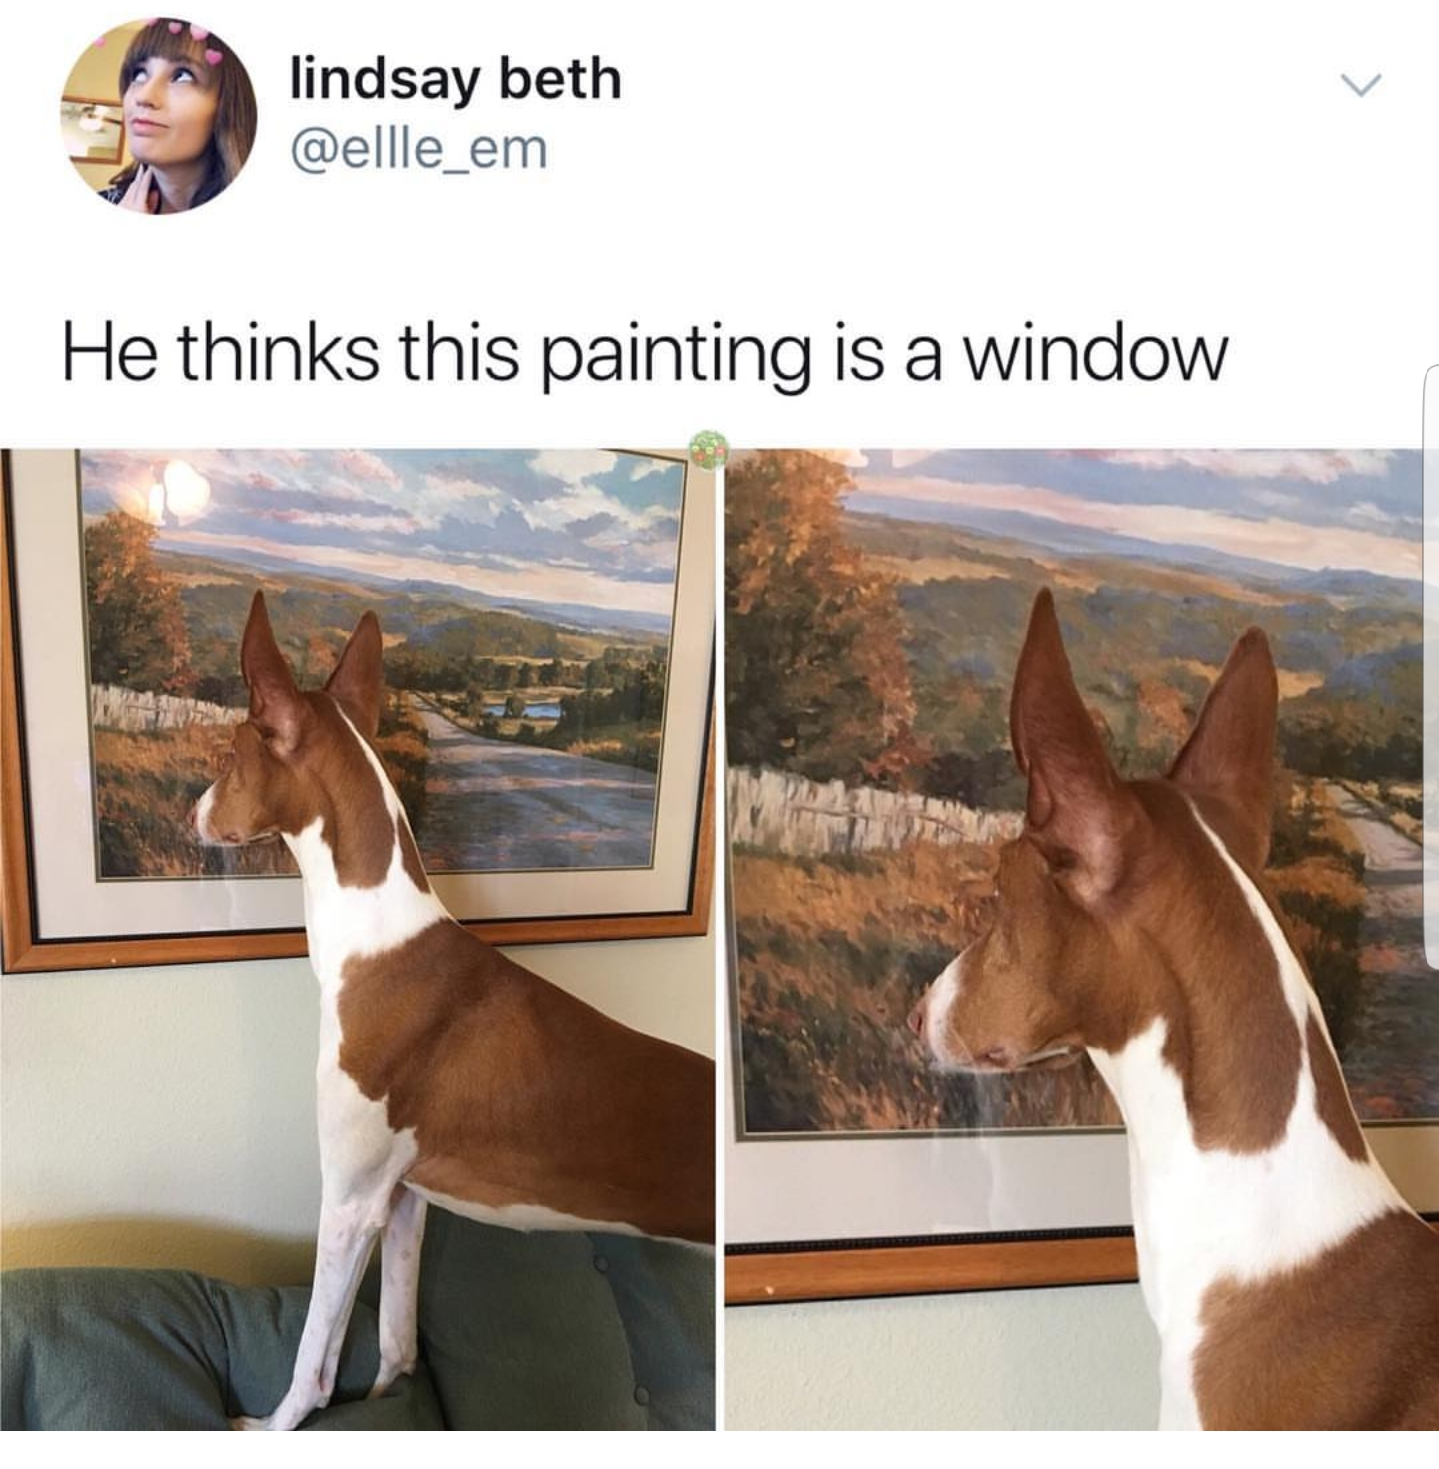 dog thinks painting is window - lindsay beth He thinks this painting is a window